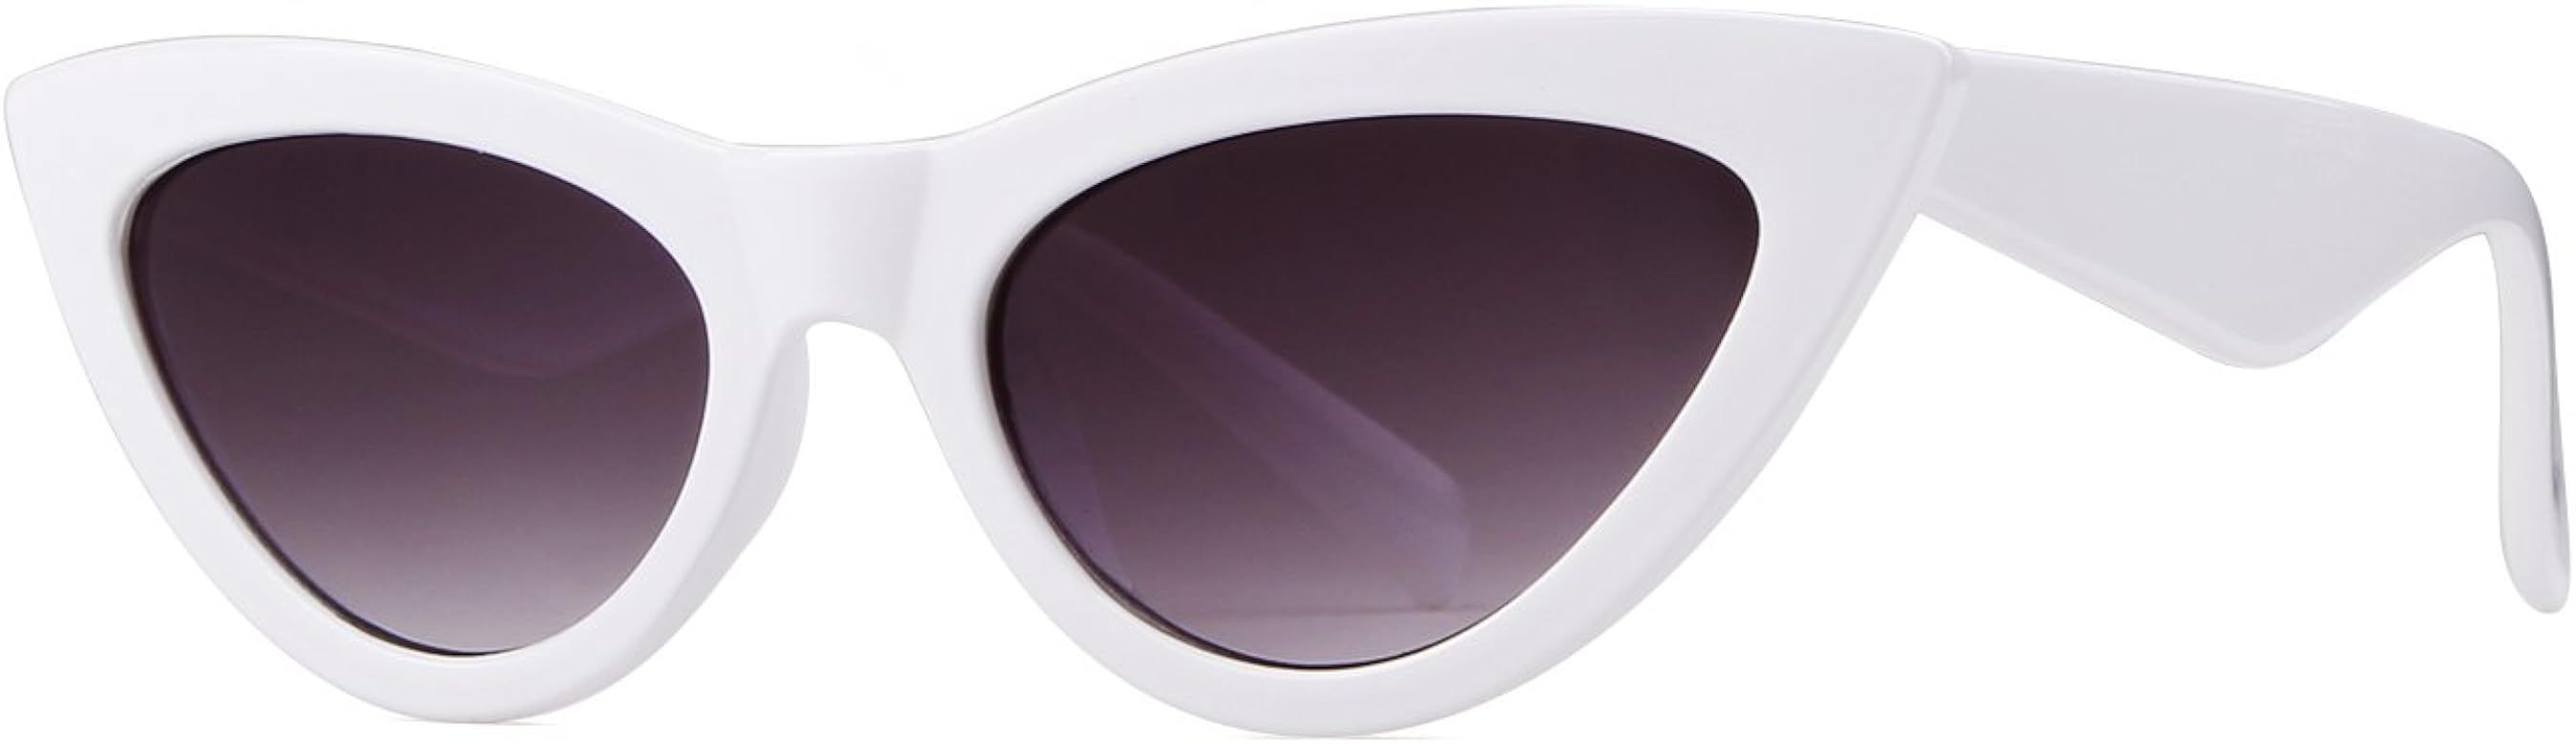 ADE WU Classic Cat Eye Sunglasses For Women Retro Vintage Cateye Sun Glasses UV400 Protection | Amazon (US)